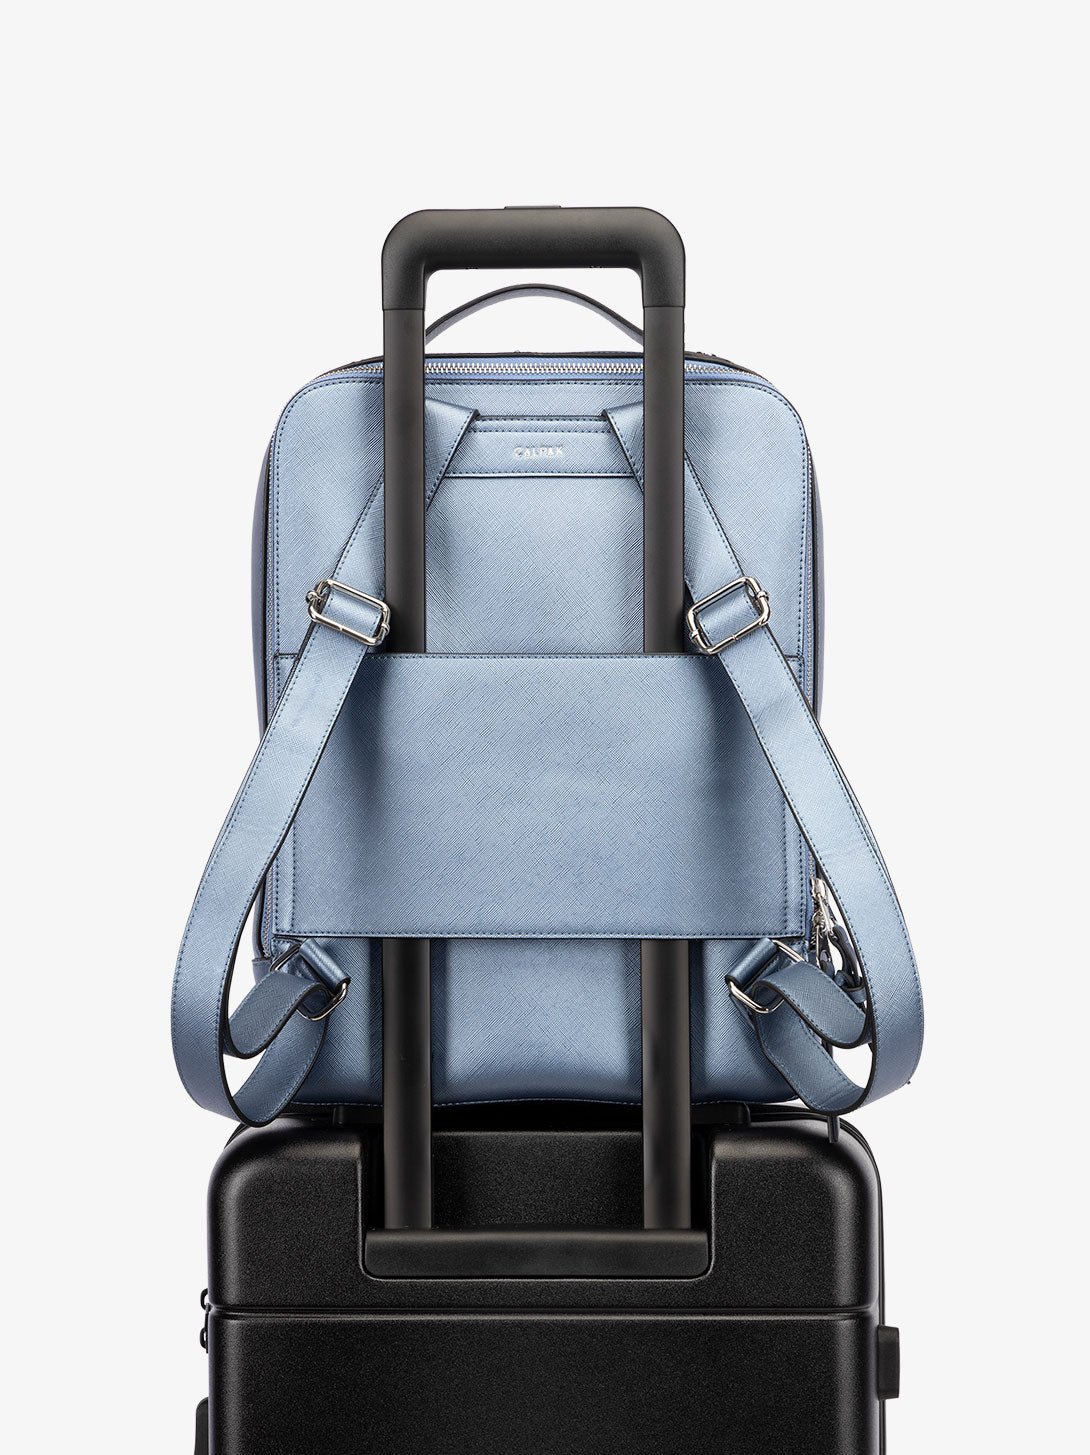 CALPAK Kaya Laptop Backpack for travel with trolley sleeve and adjustable straps in metallic light blue stargaze